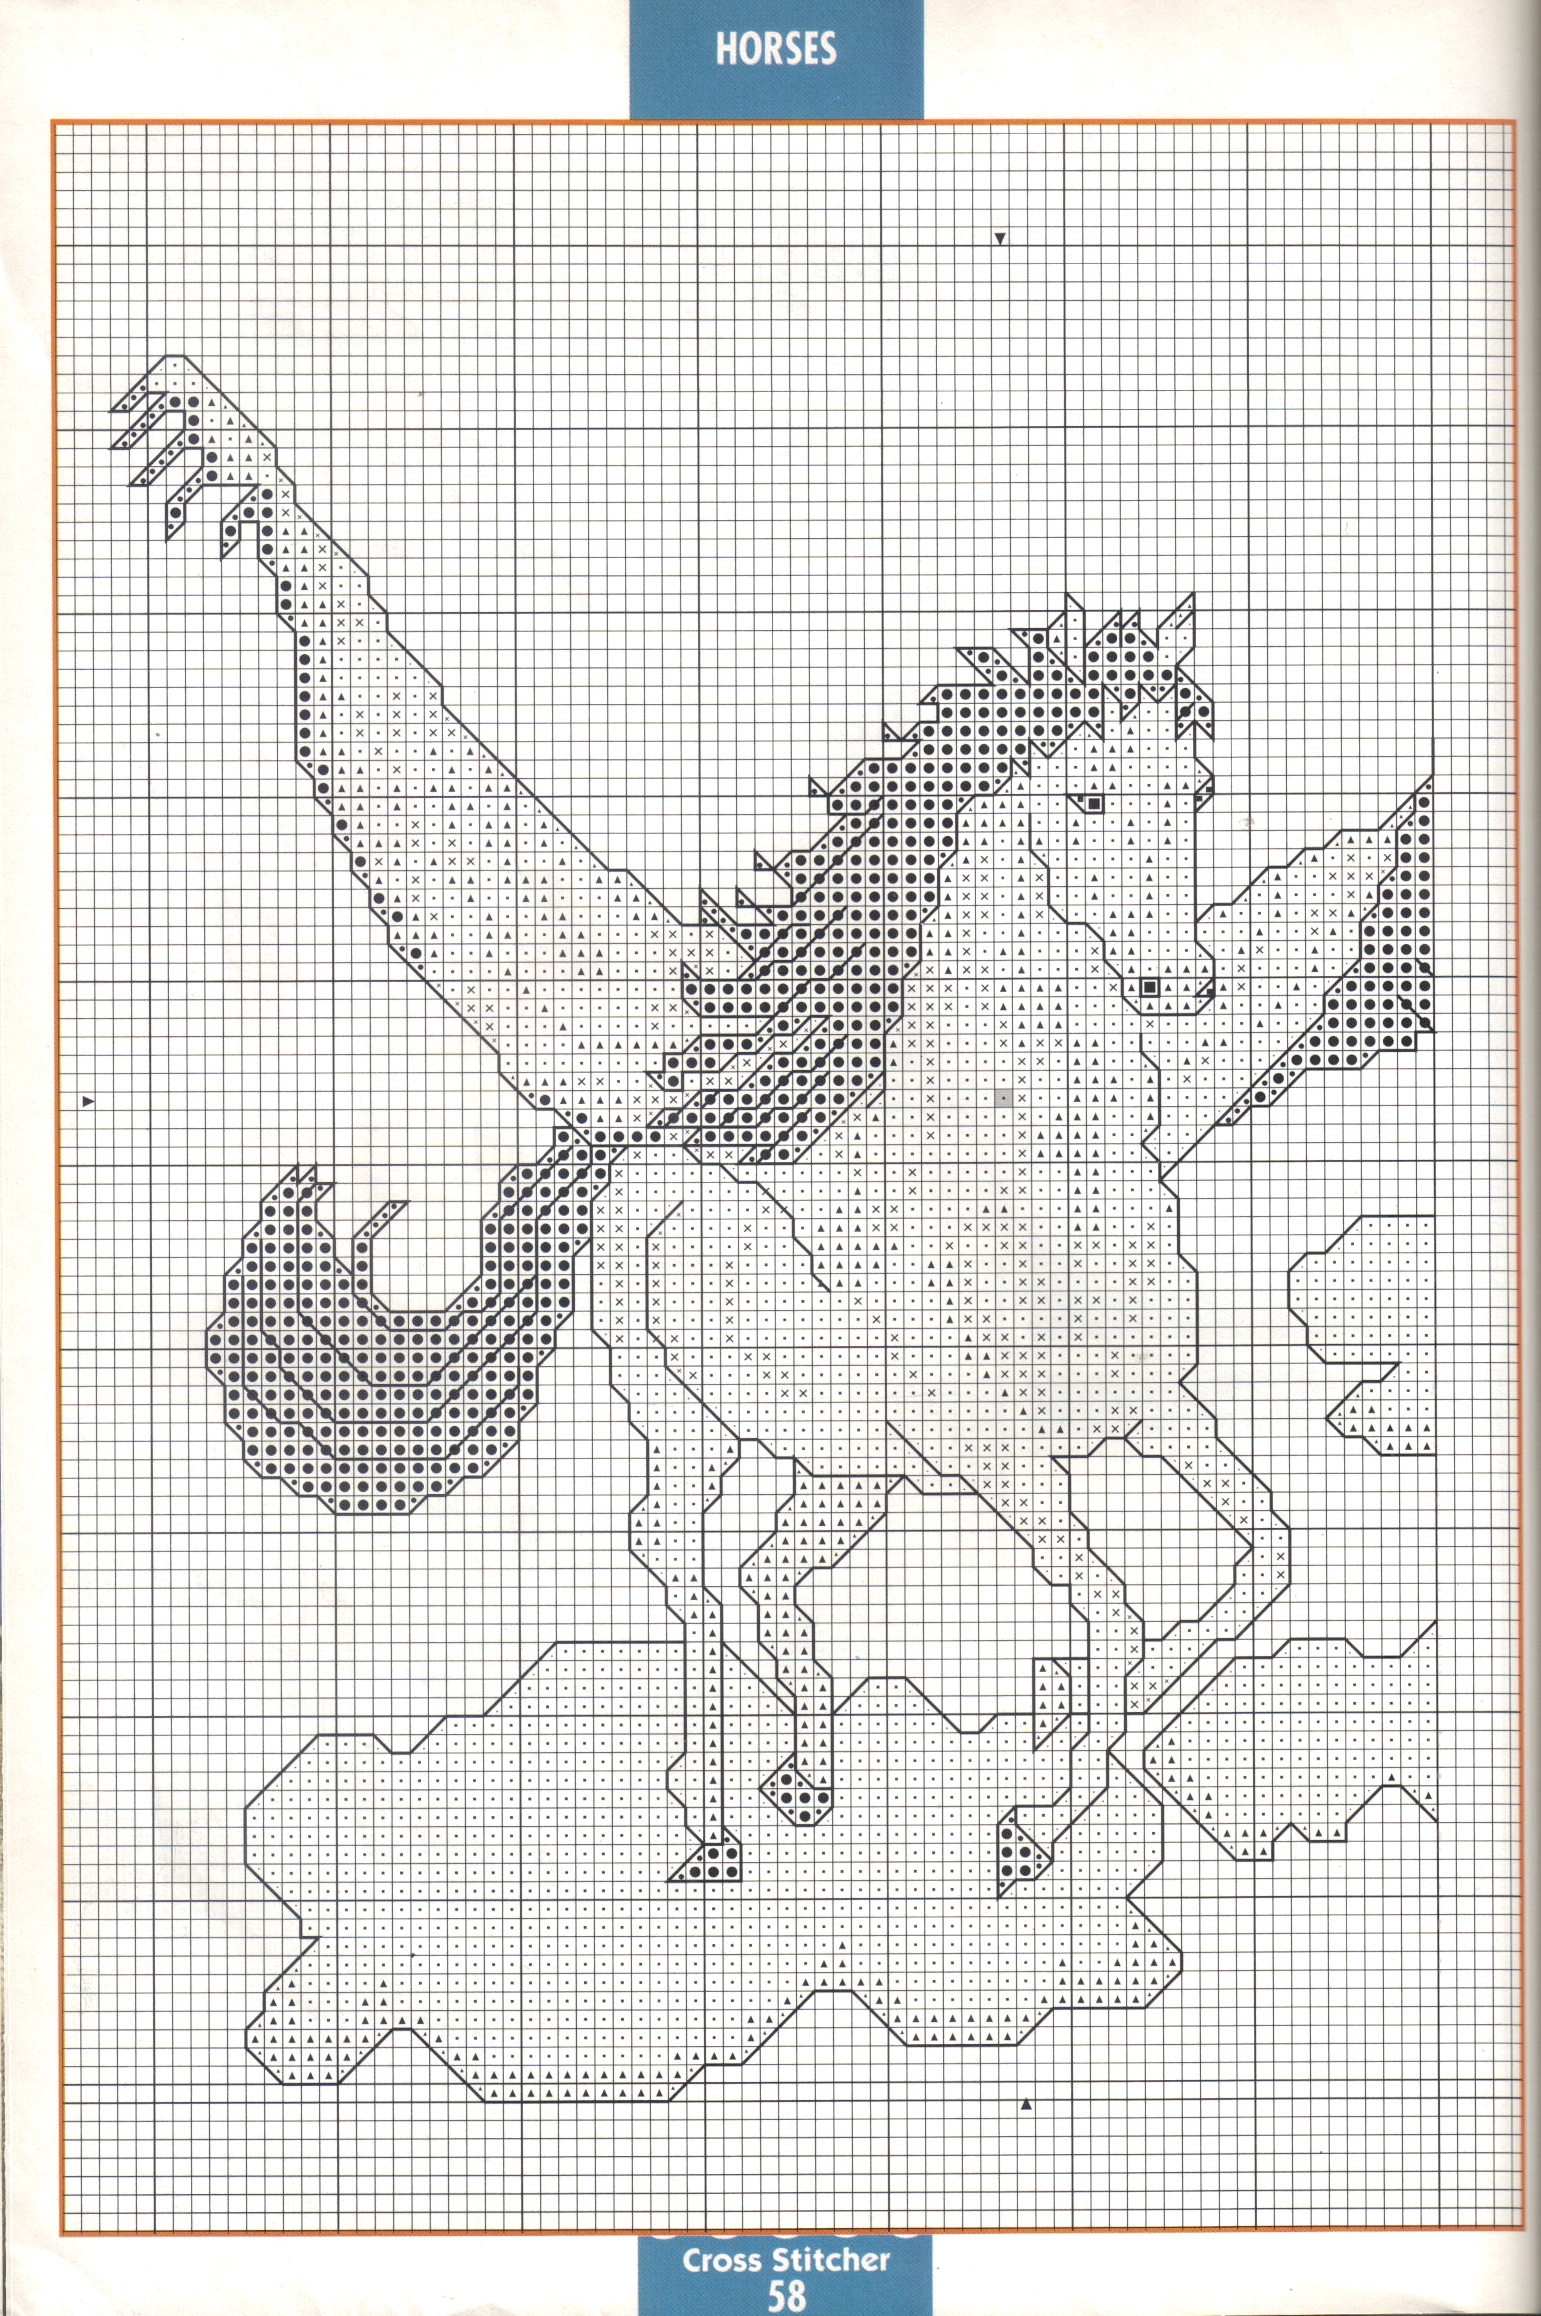 A flying horse cross stitch pattern (1)